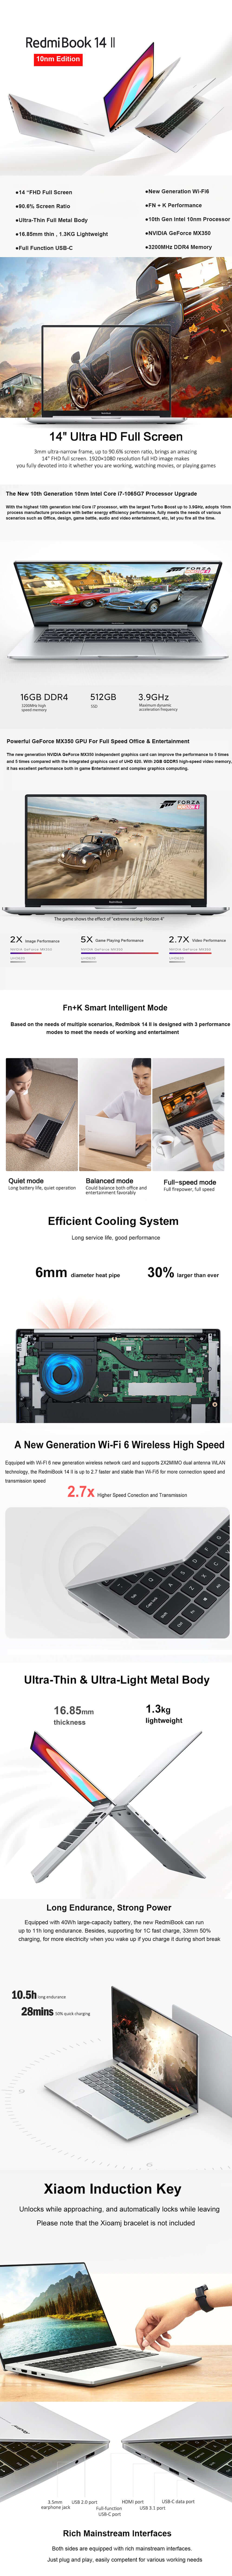 Xiaomi RedmiBook 14 Laptop II 14 inch Intel i7-1065G7 NVIDIA GeForce MX350 16G DDR4 512GB SSD 91% Ratio 100%sRGB WiFi 6 Full-featured Type-C Notebook 29